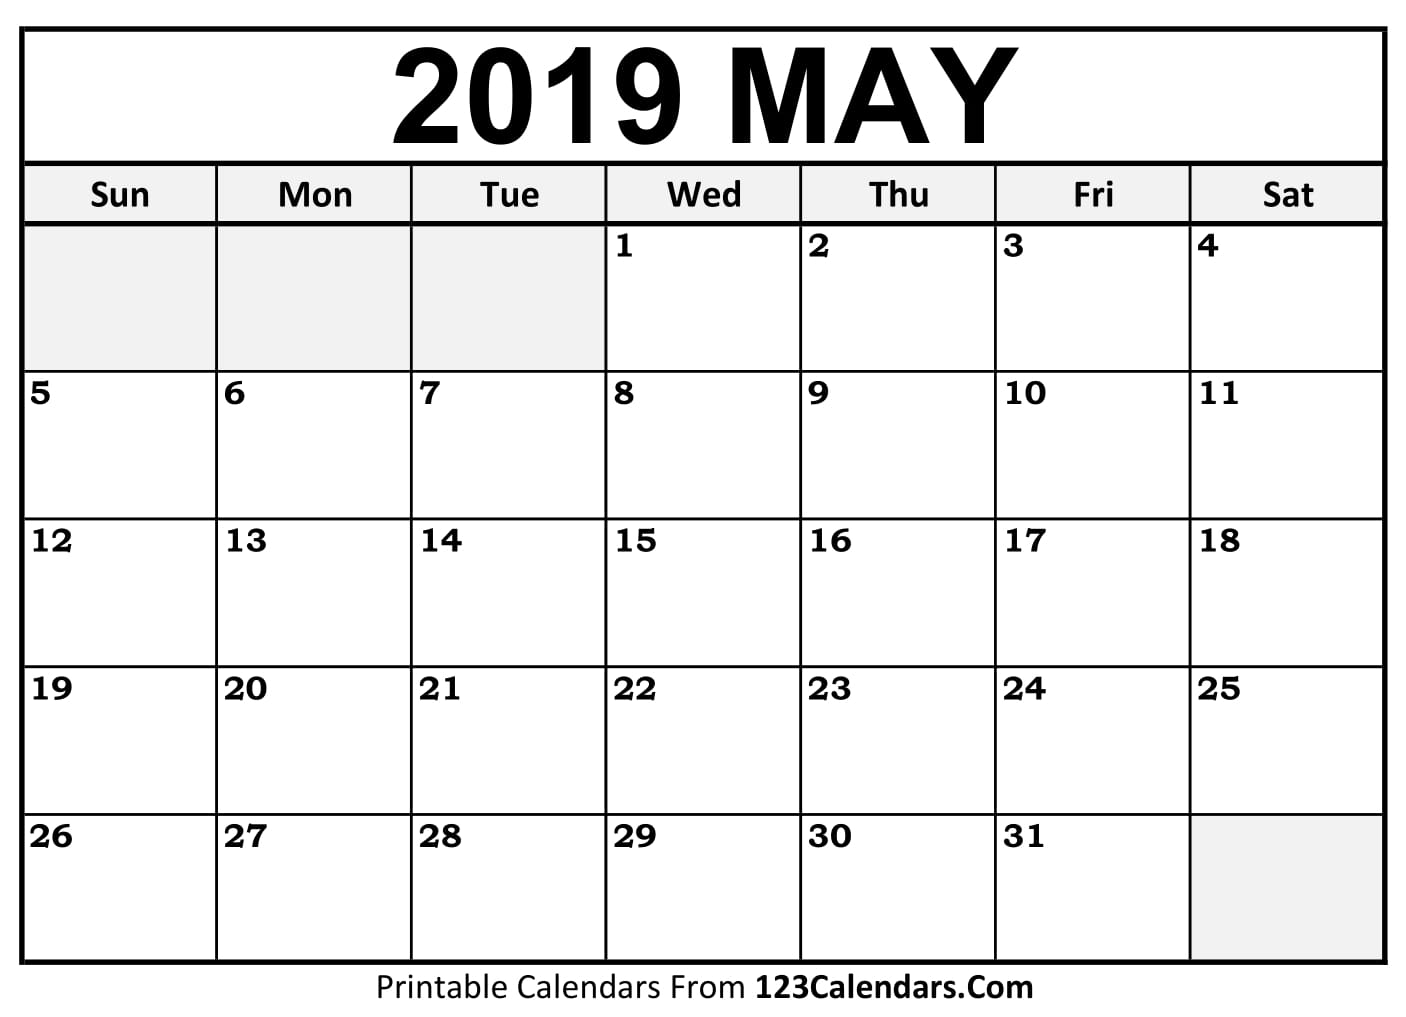 free-5-may-2018-calendar-printable-template-pdf-source-template